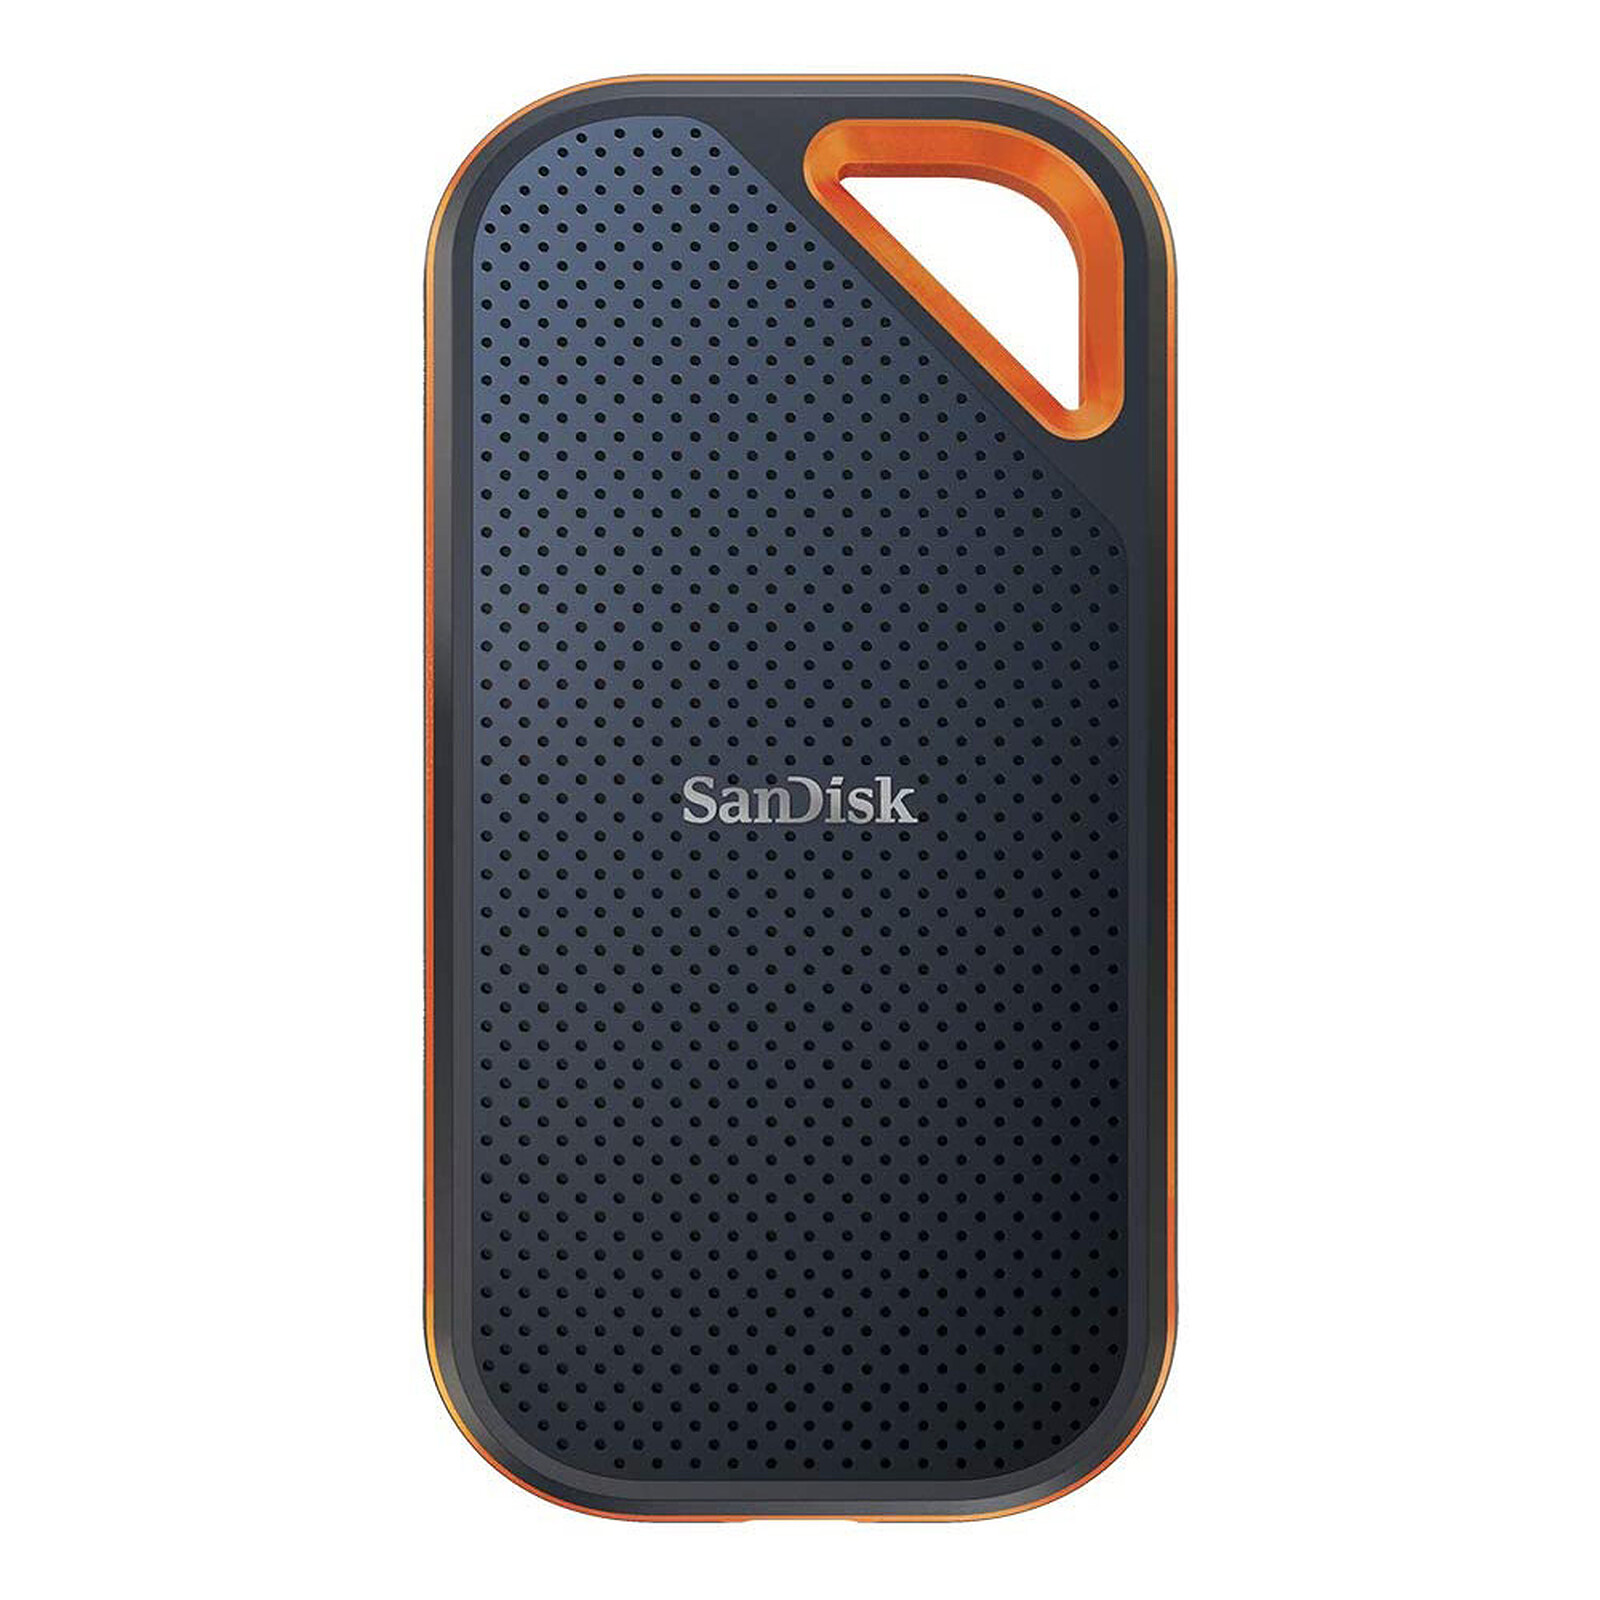 SanDisk Extreme Portable SSD V2 2TB - External hard drive Sandisk on LDLC